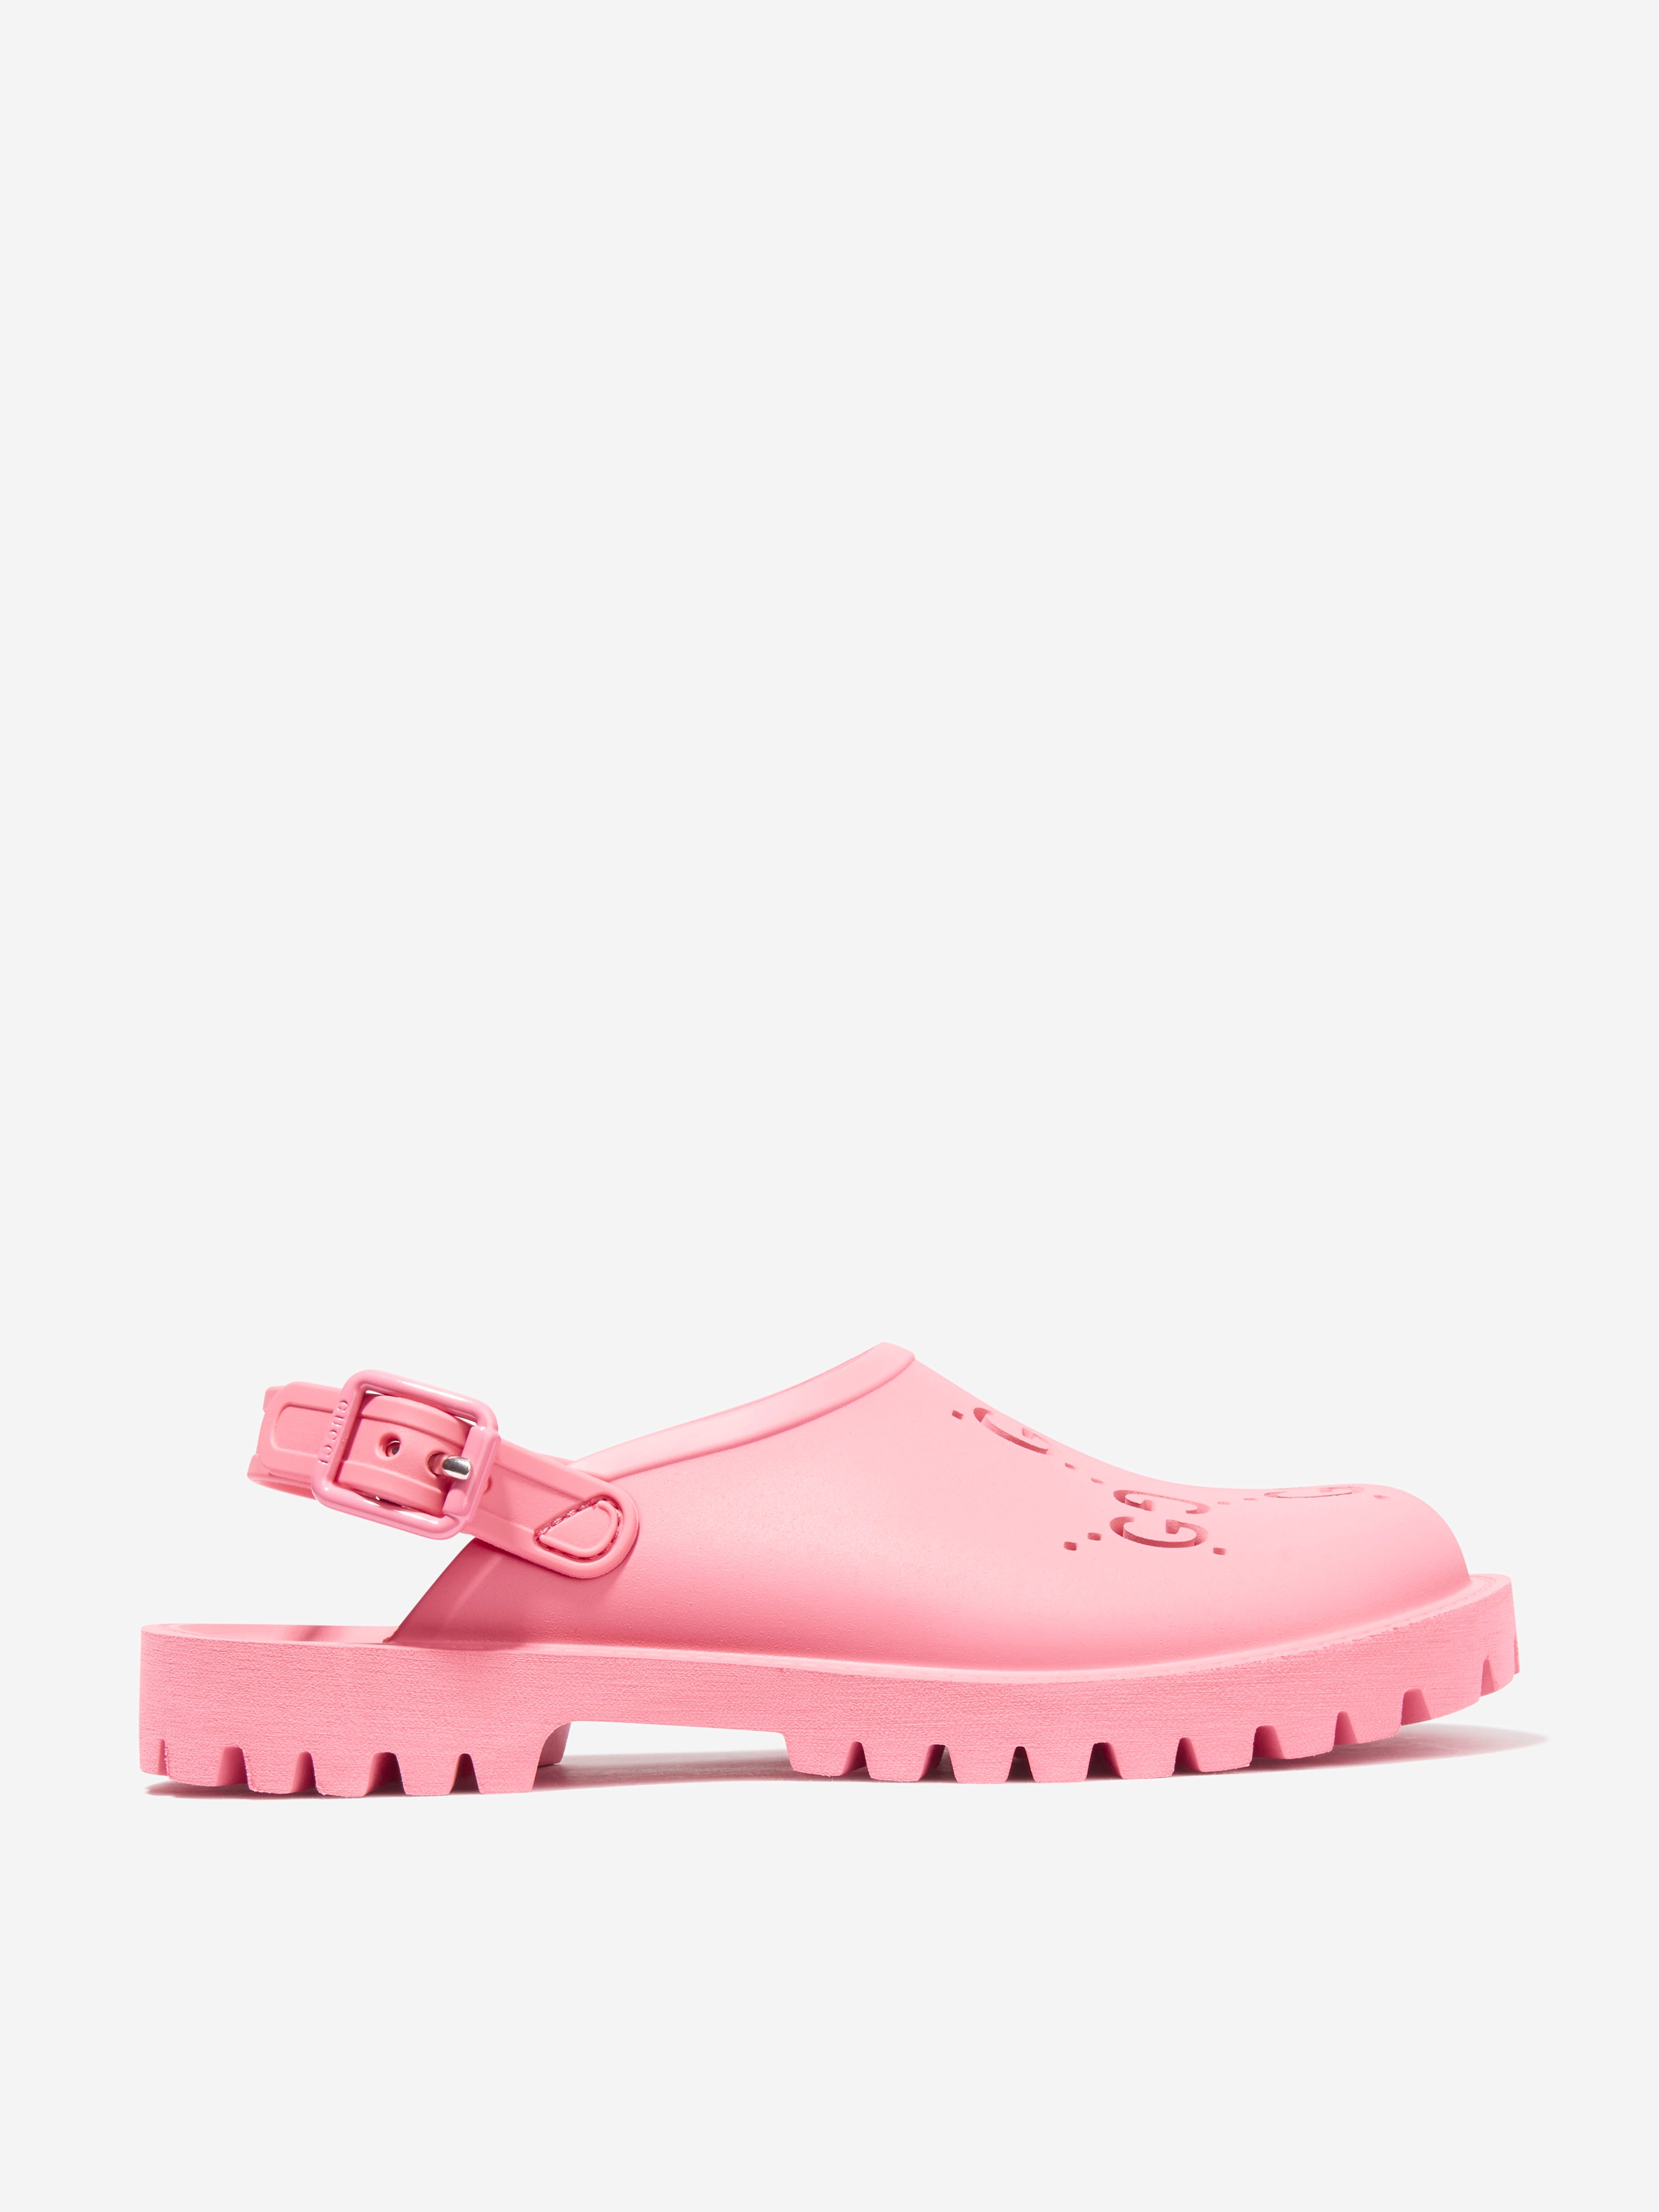 Gucci - Girls Pink Rubber Sandals